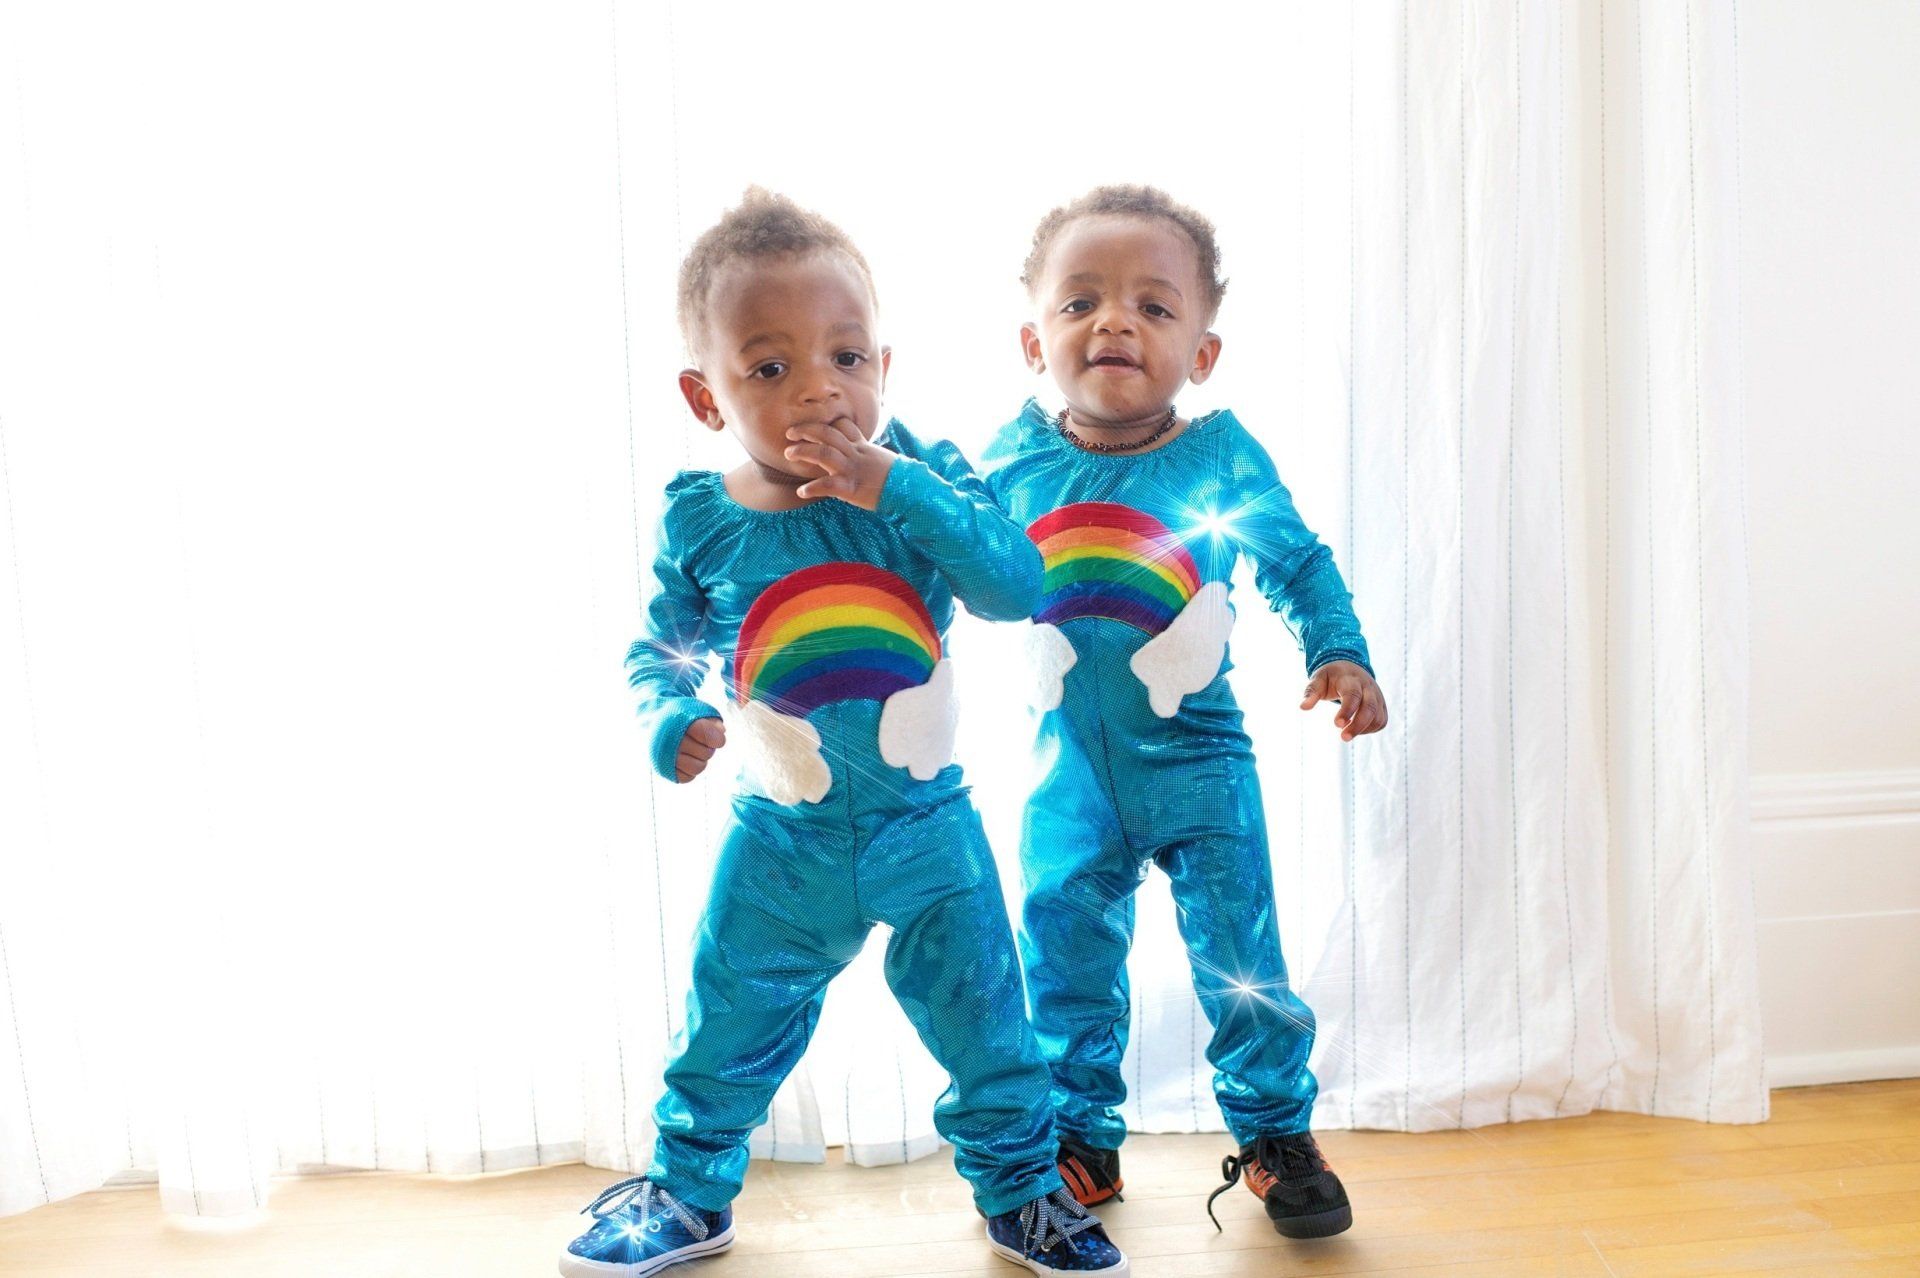 Toddlers in rainbow costumes. Image: Frank McKenna via Unsplash